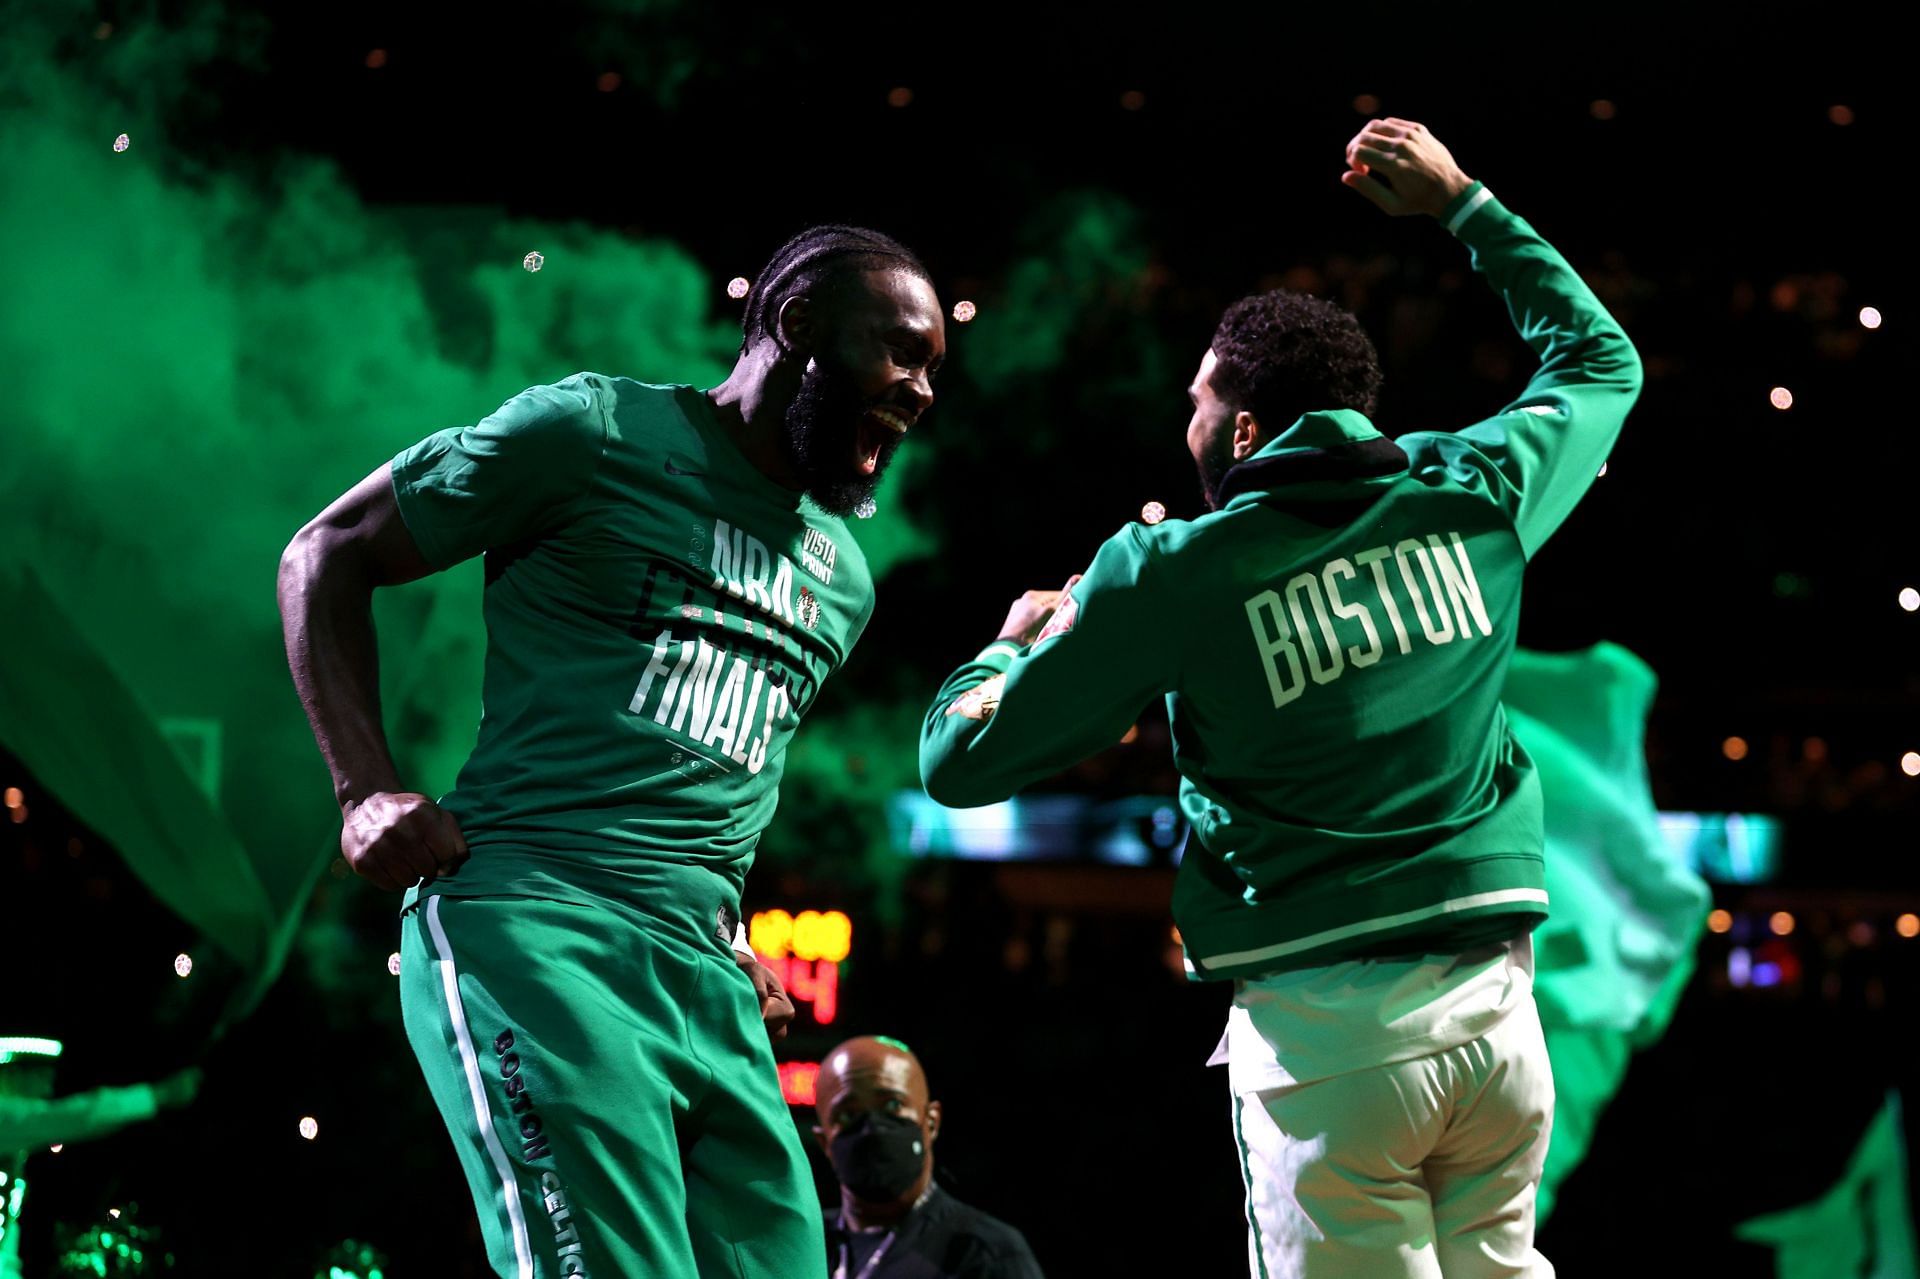 Celtics' Smart credits trust, IQ for defense that won him 2022 DPOY